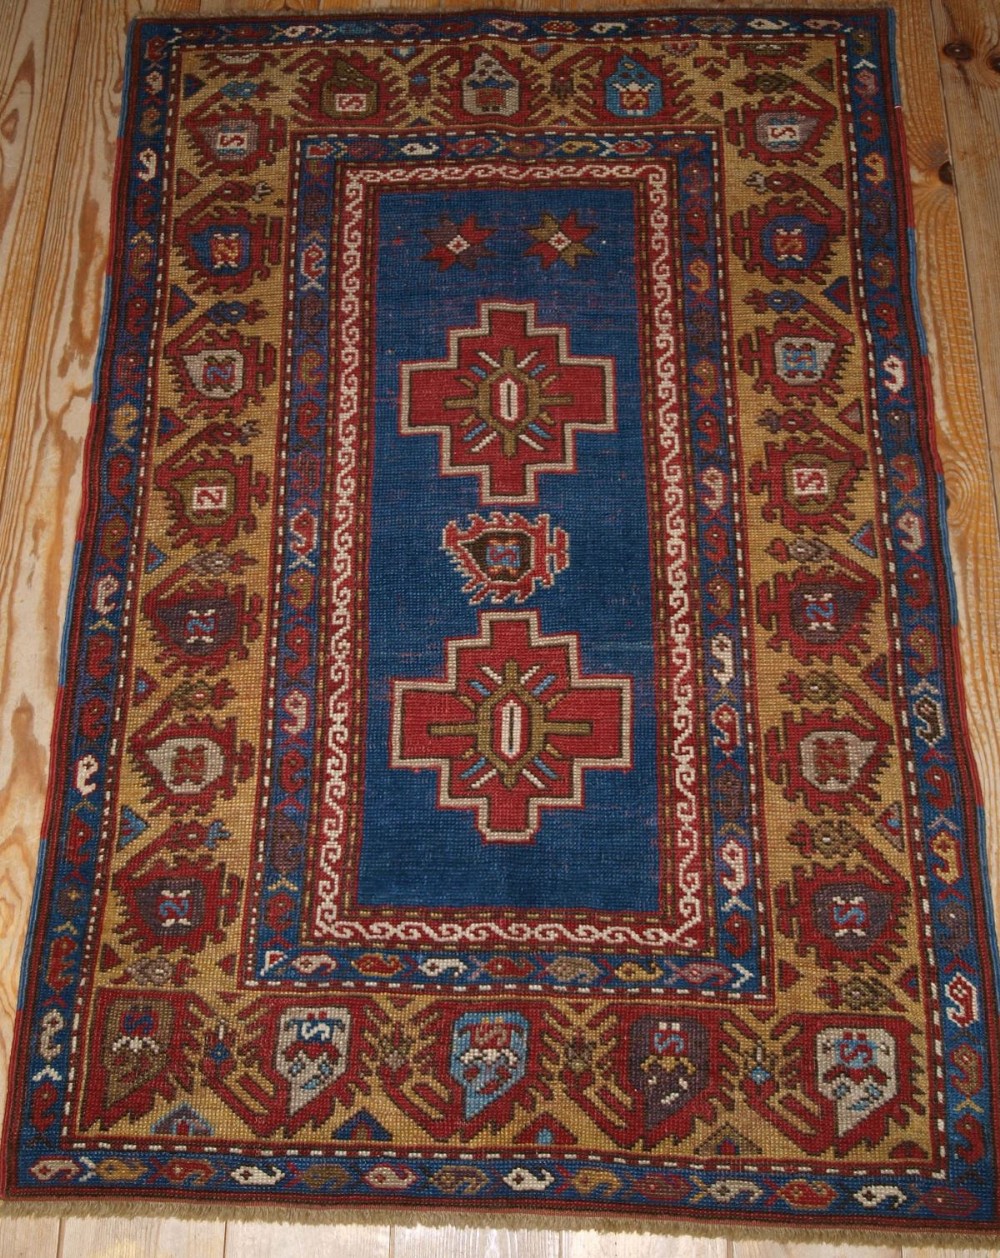 antique caucasian rug of small size unusual design late 19th cent